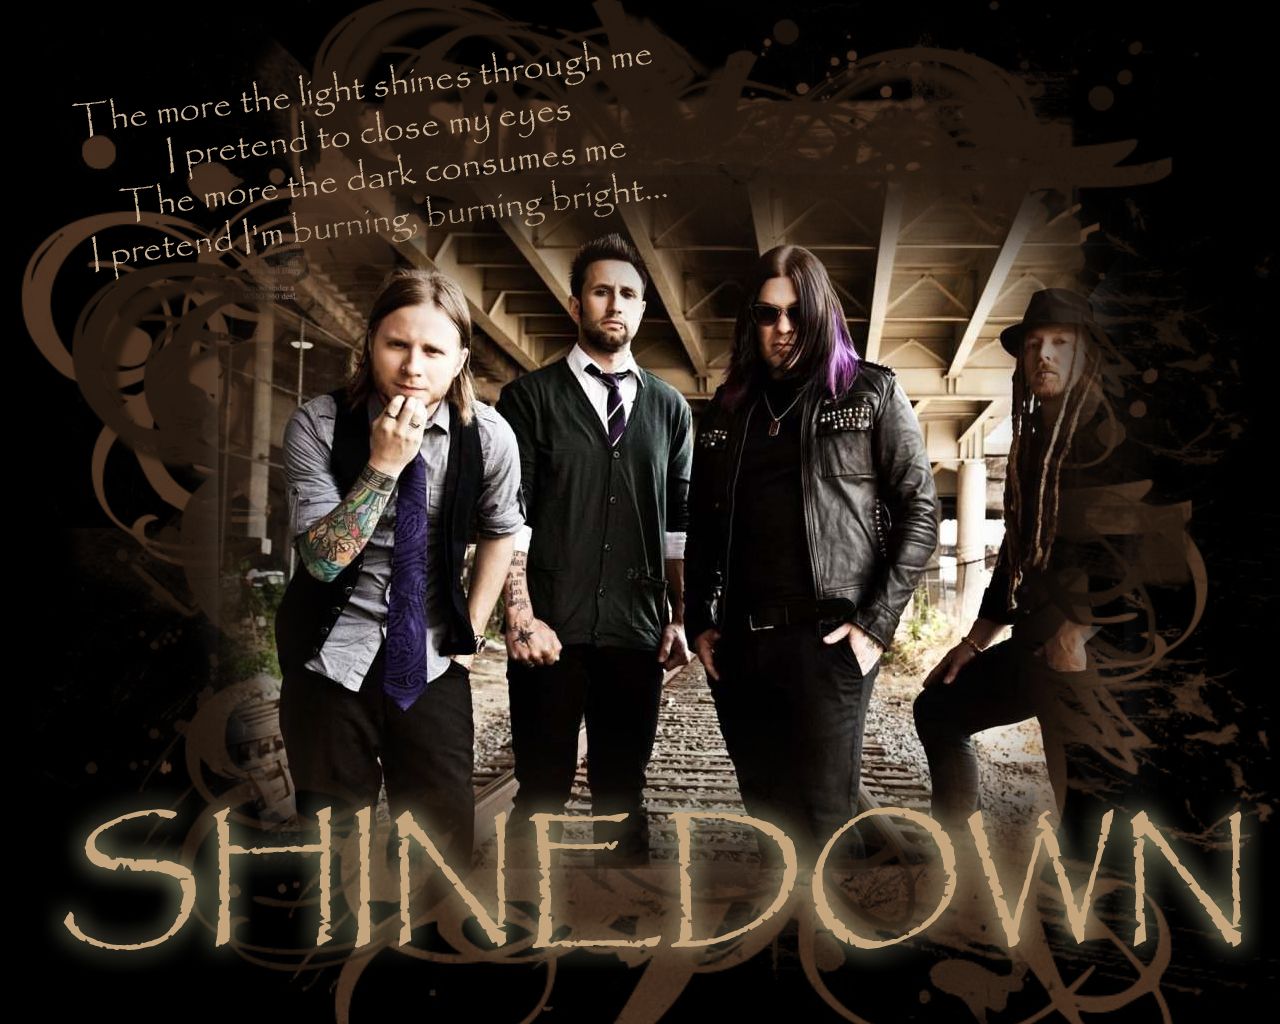 Shinedown Wallpaper. Shinedown Lyric Wallpaper Madness, Unity Shinedown Lyrics Wallpaper and Que TES Shinedown Wallpaper